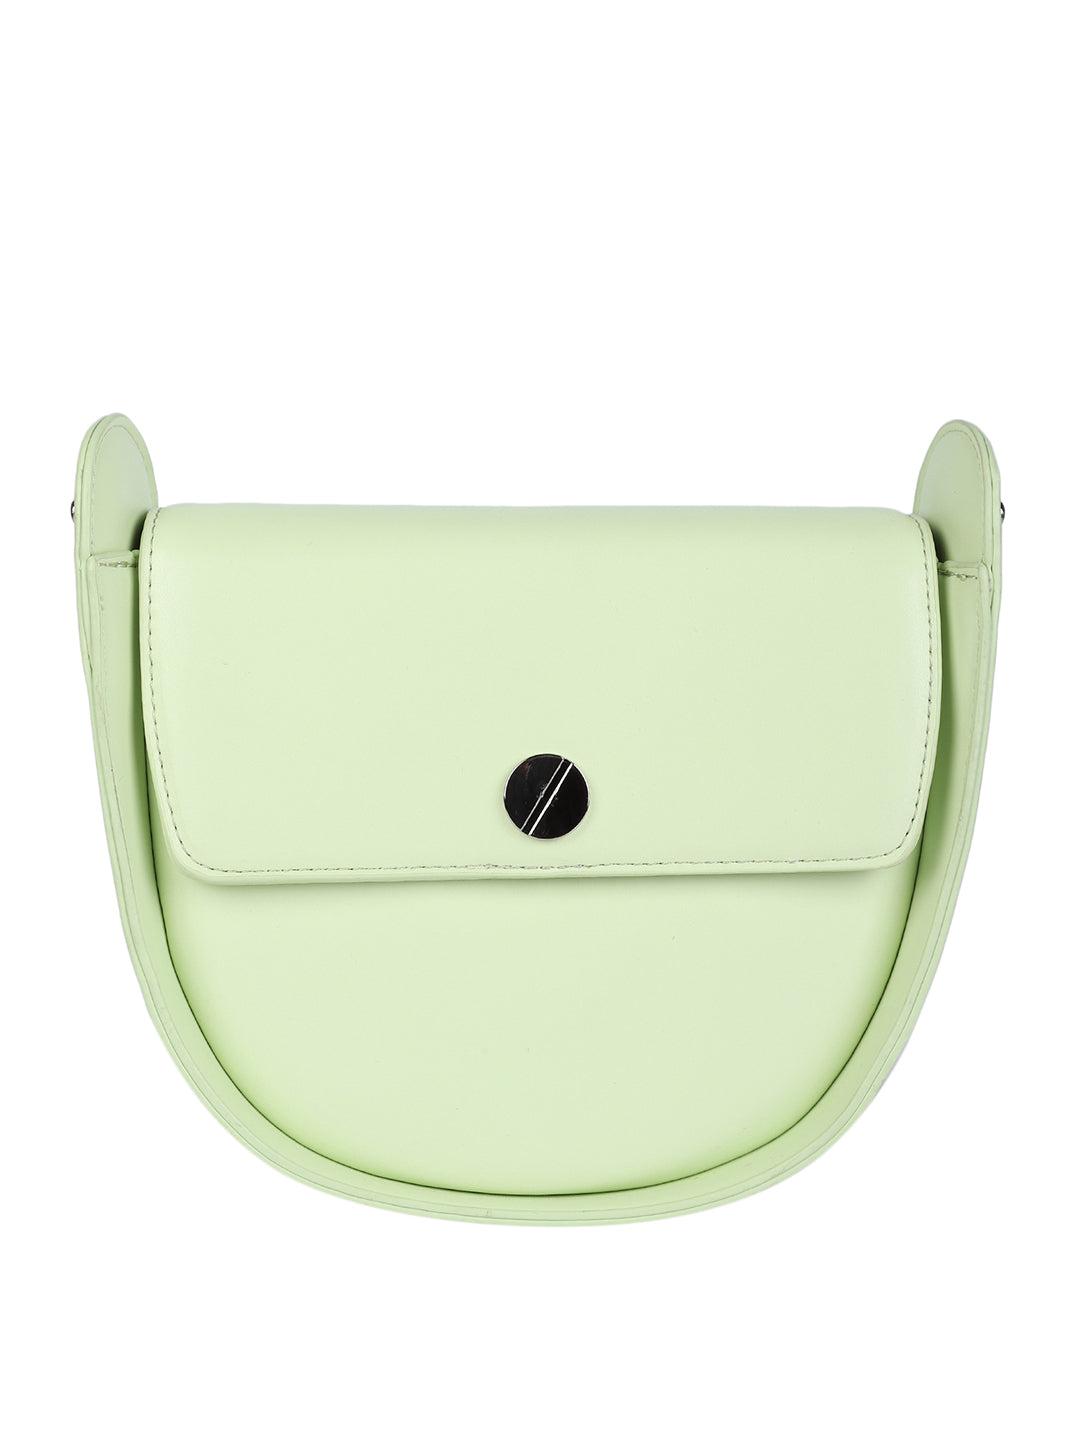 MINI WESST Women's Green Handheld Bag